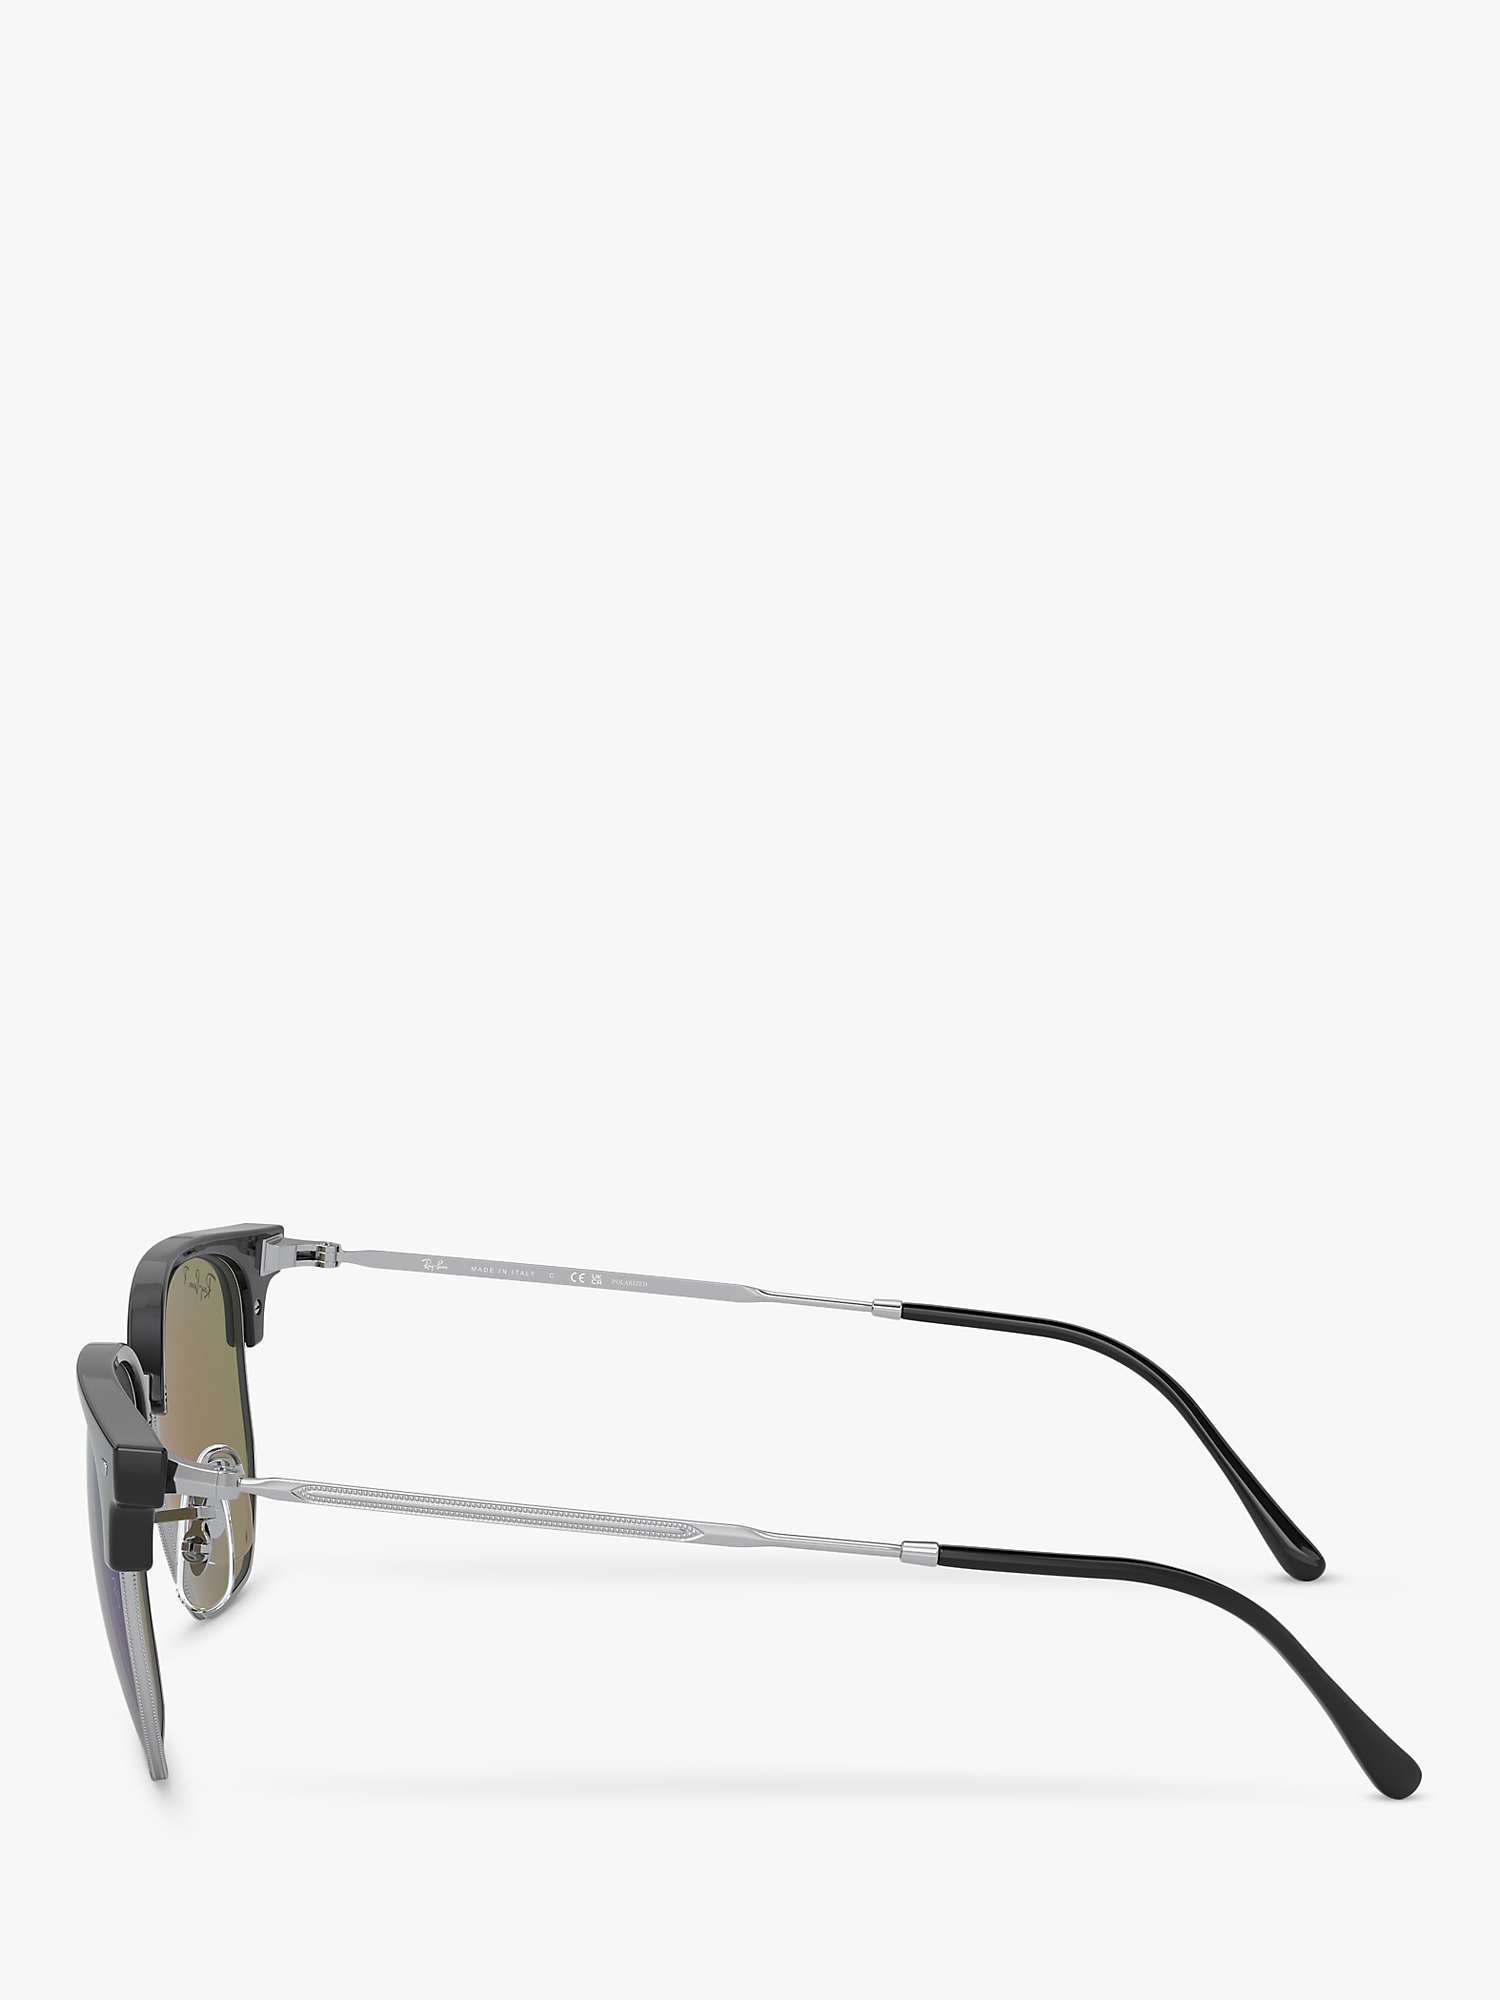 Buy Ray-Ban RB8265 Irregular Sunglasses, Black/Silver Online at johnlewis.com